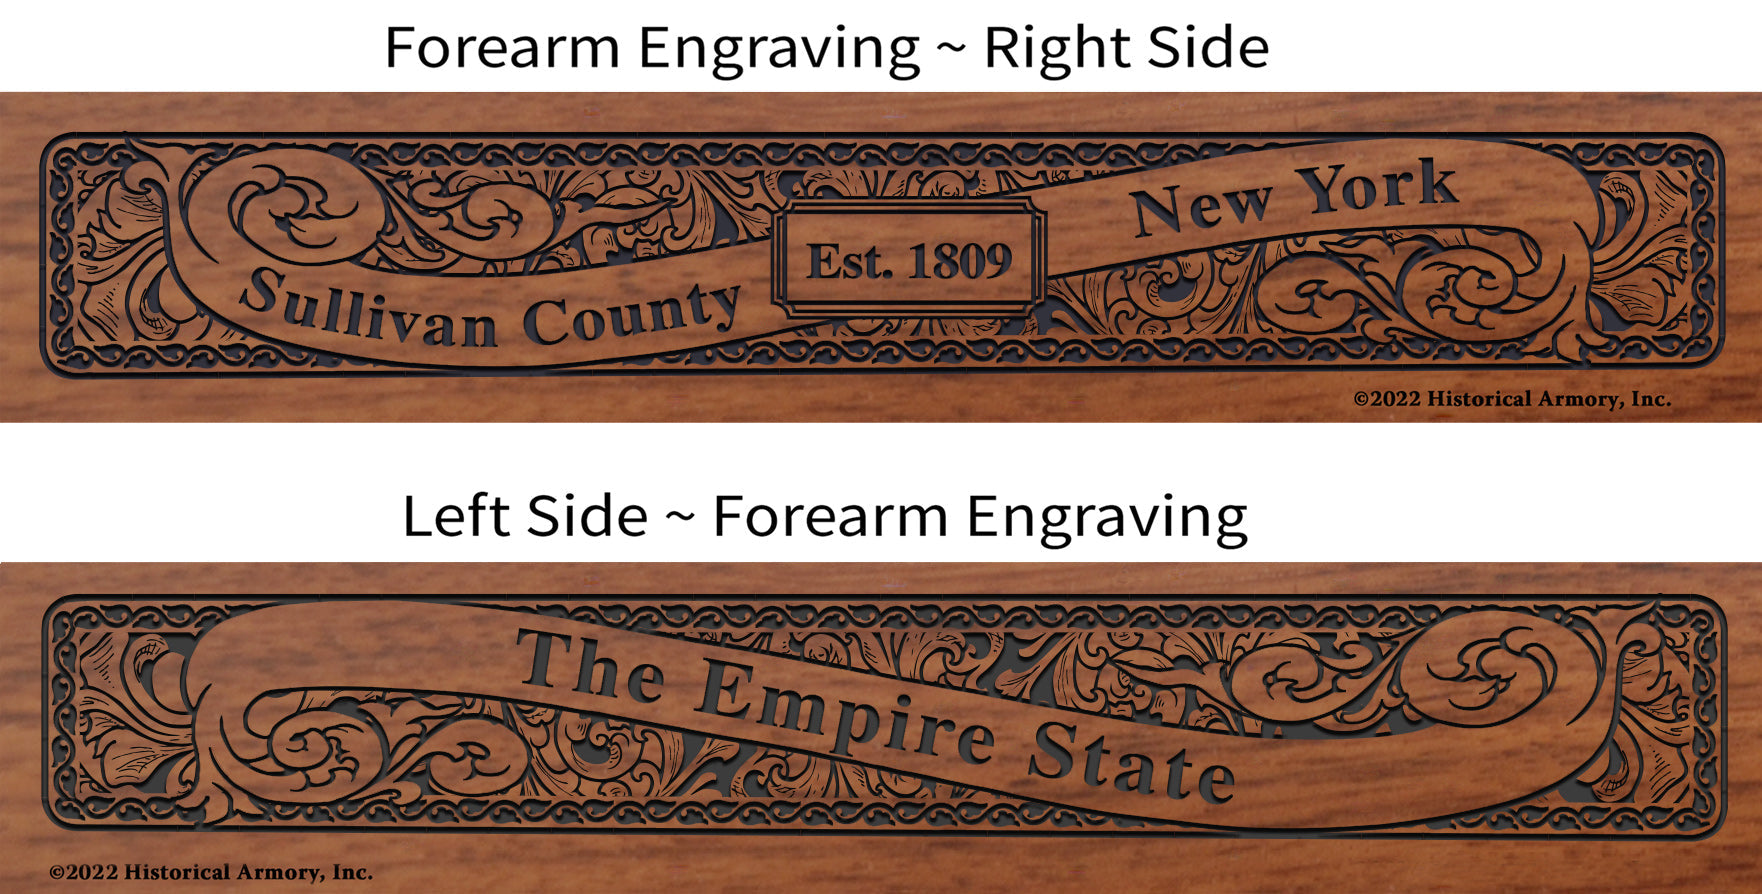 Sullivan County New York Engraved Rifle Forearm